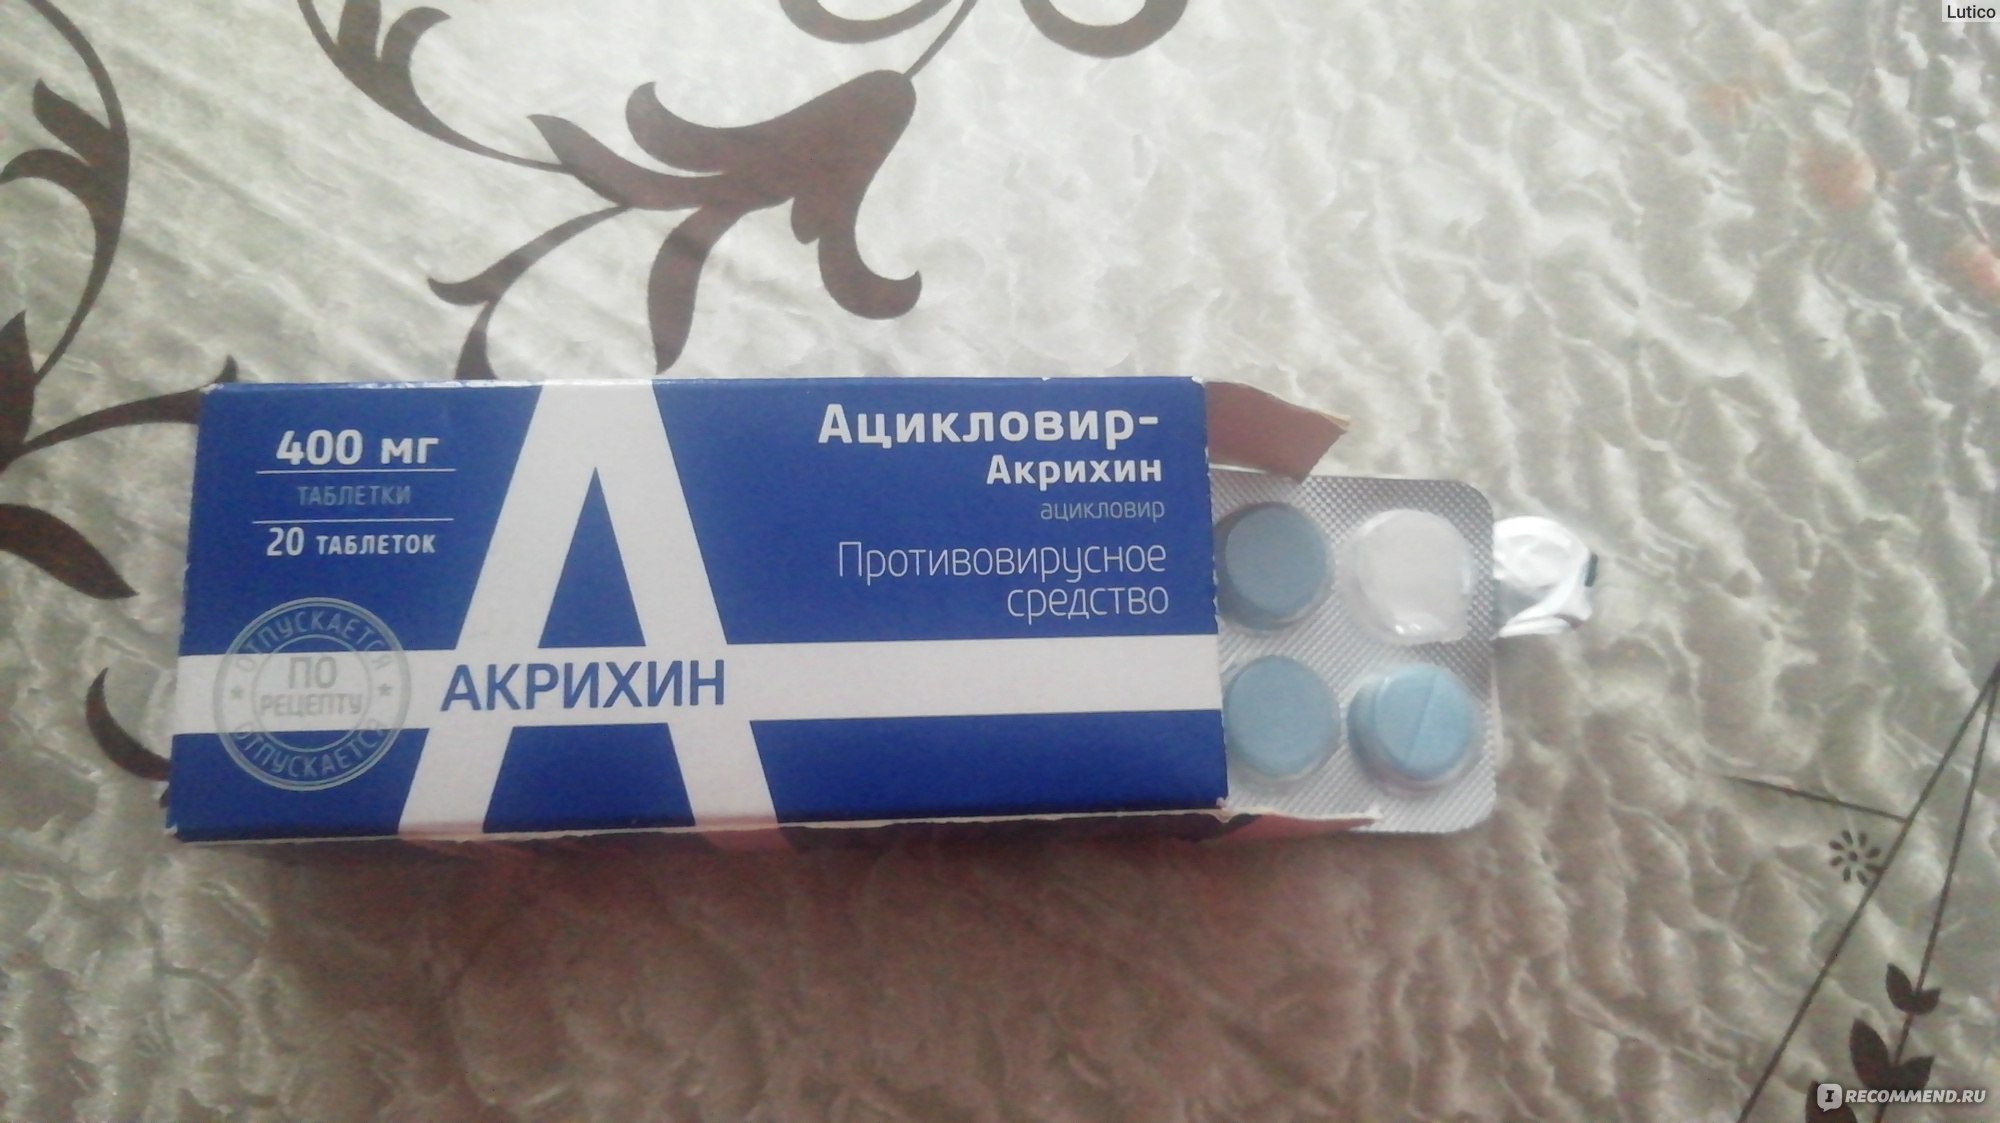 Ацикловир таблетки при простуде. Ацикловир Акрихин 400. Ацикловир-Акрихин 200 мг. Ацикловир Акрихин 400 мг. Ацикловир 250 мг таблетки.